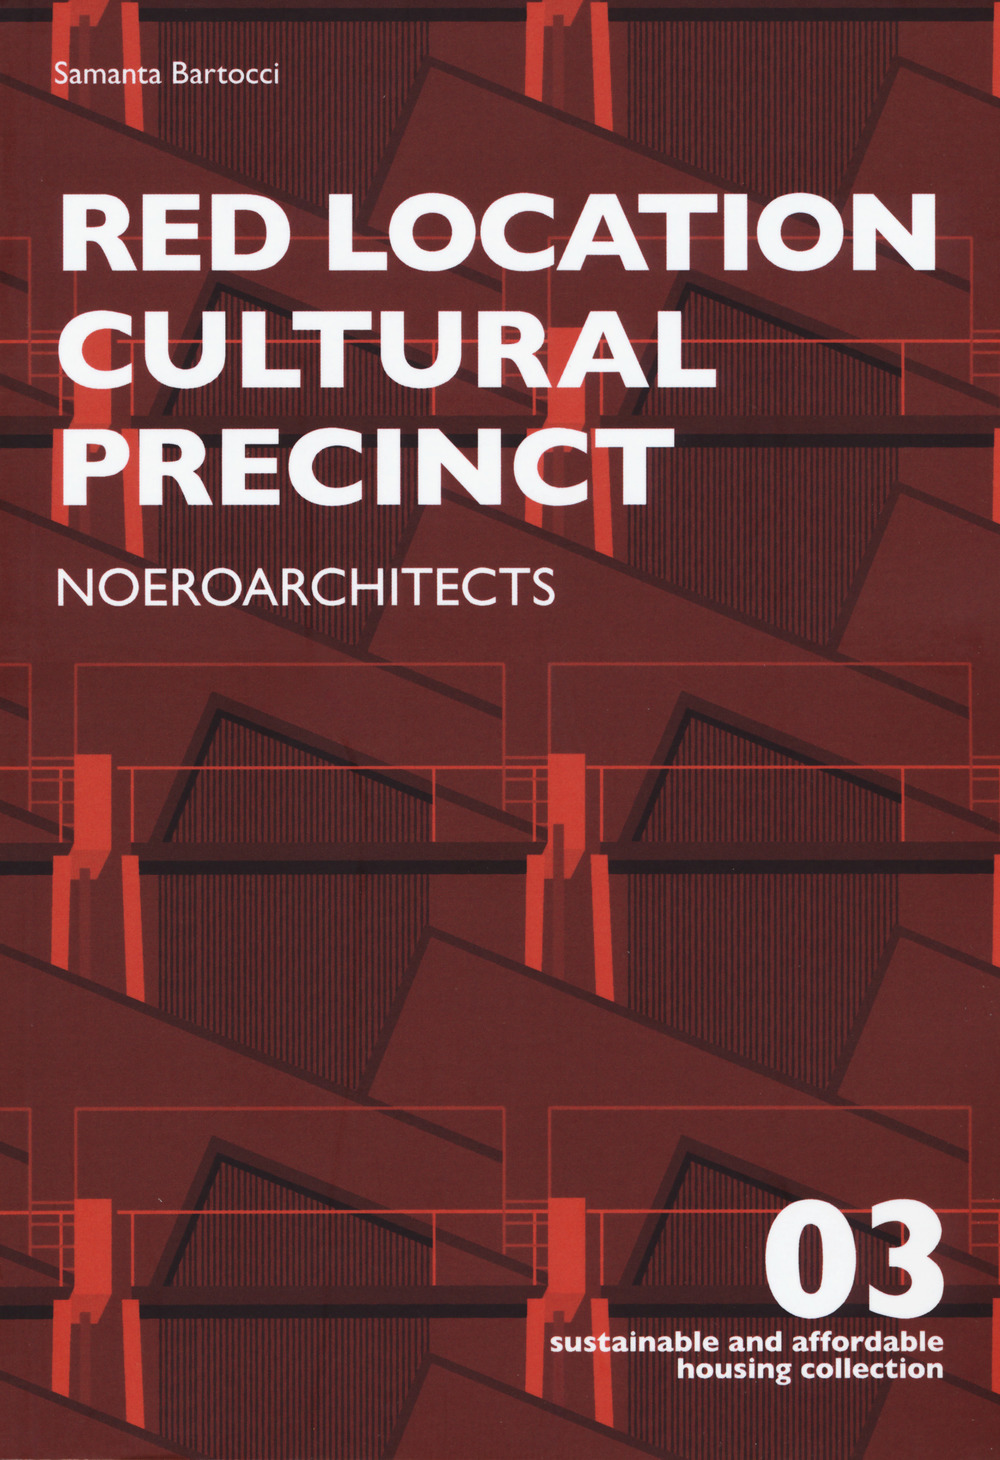 Red location cultural precinct. Noeroarchitects